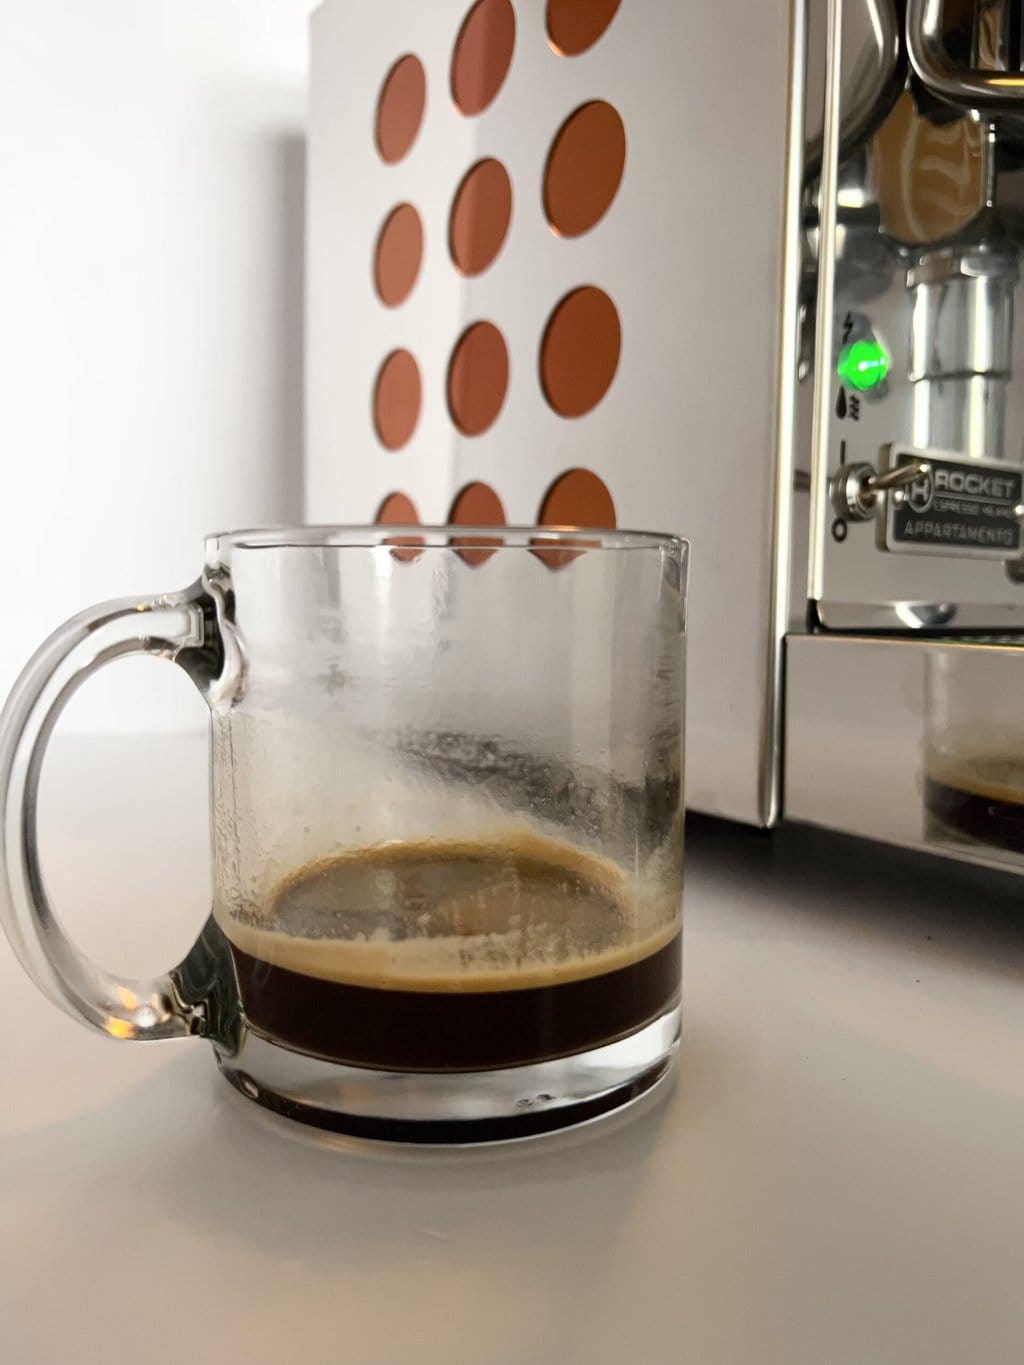 a cup of espresso against the background of the Rocket Espresso Appartamento coffee machine